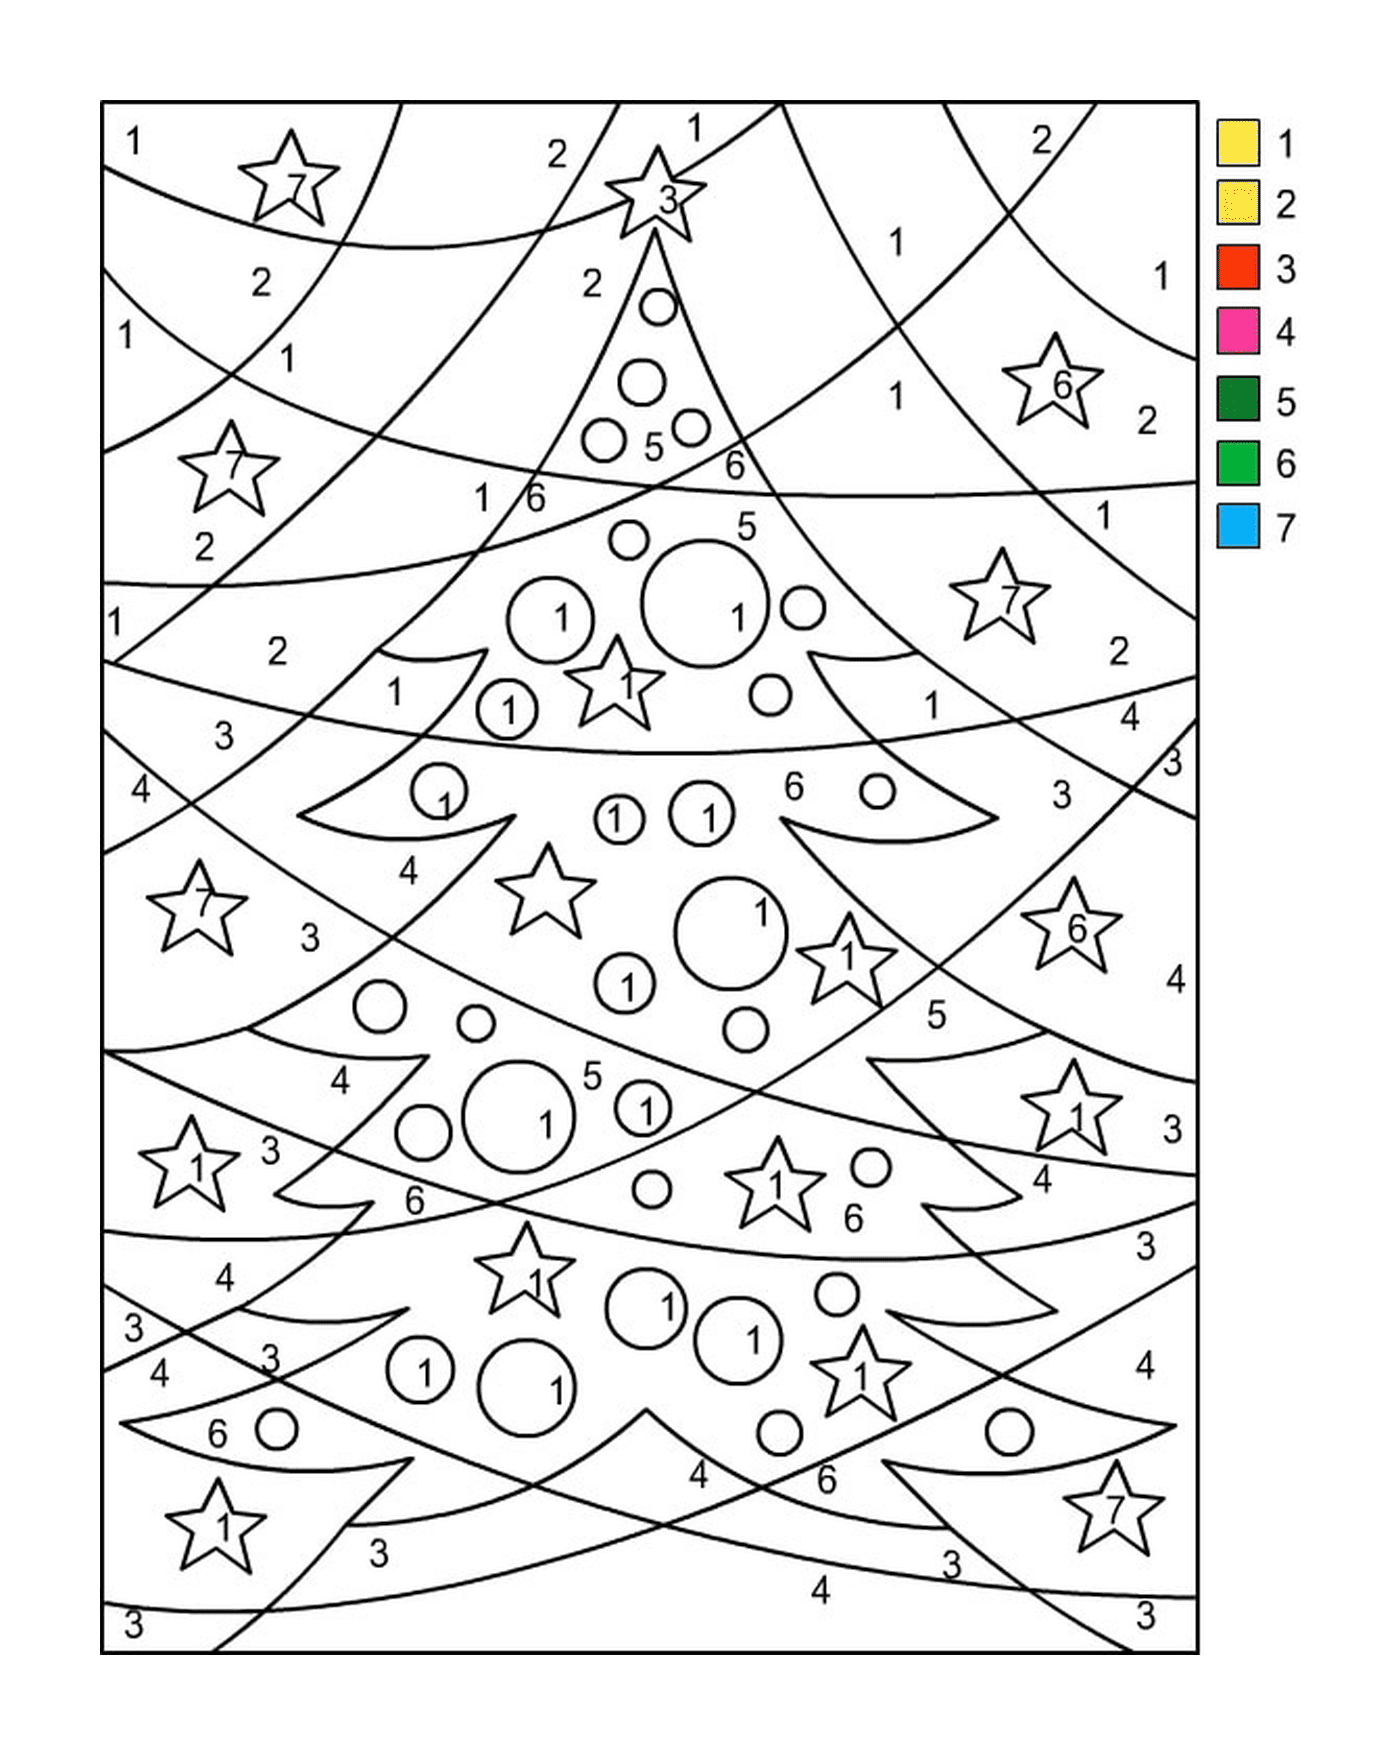  Christmas tree numbered magic 